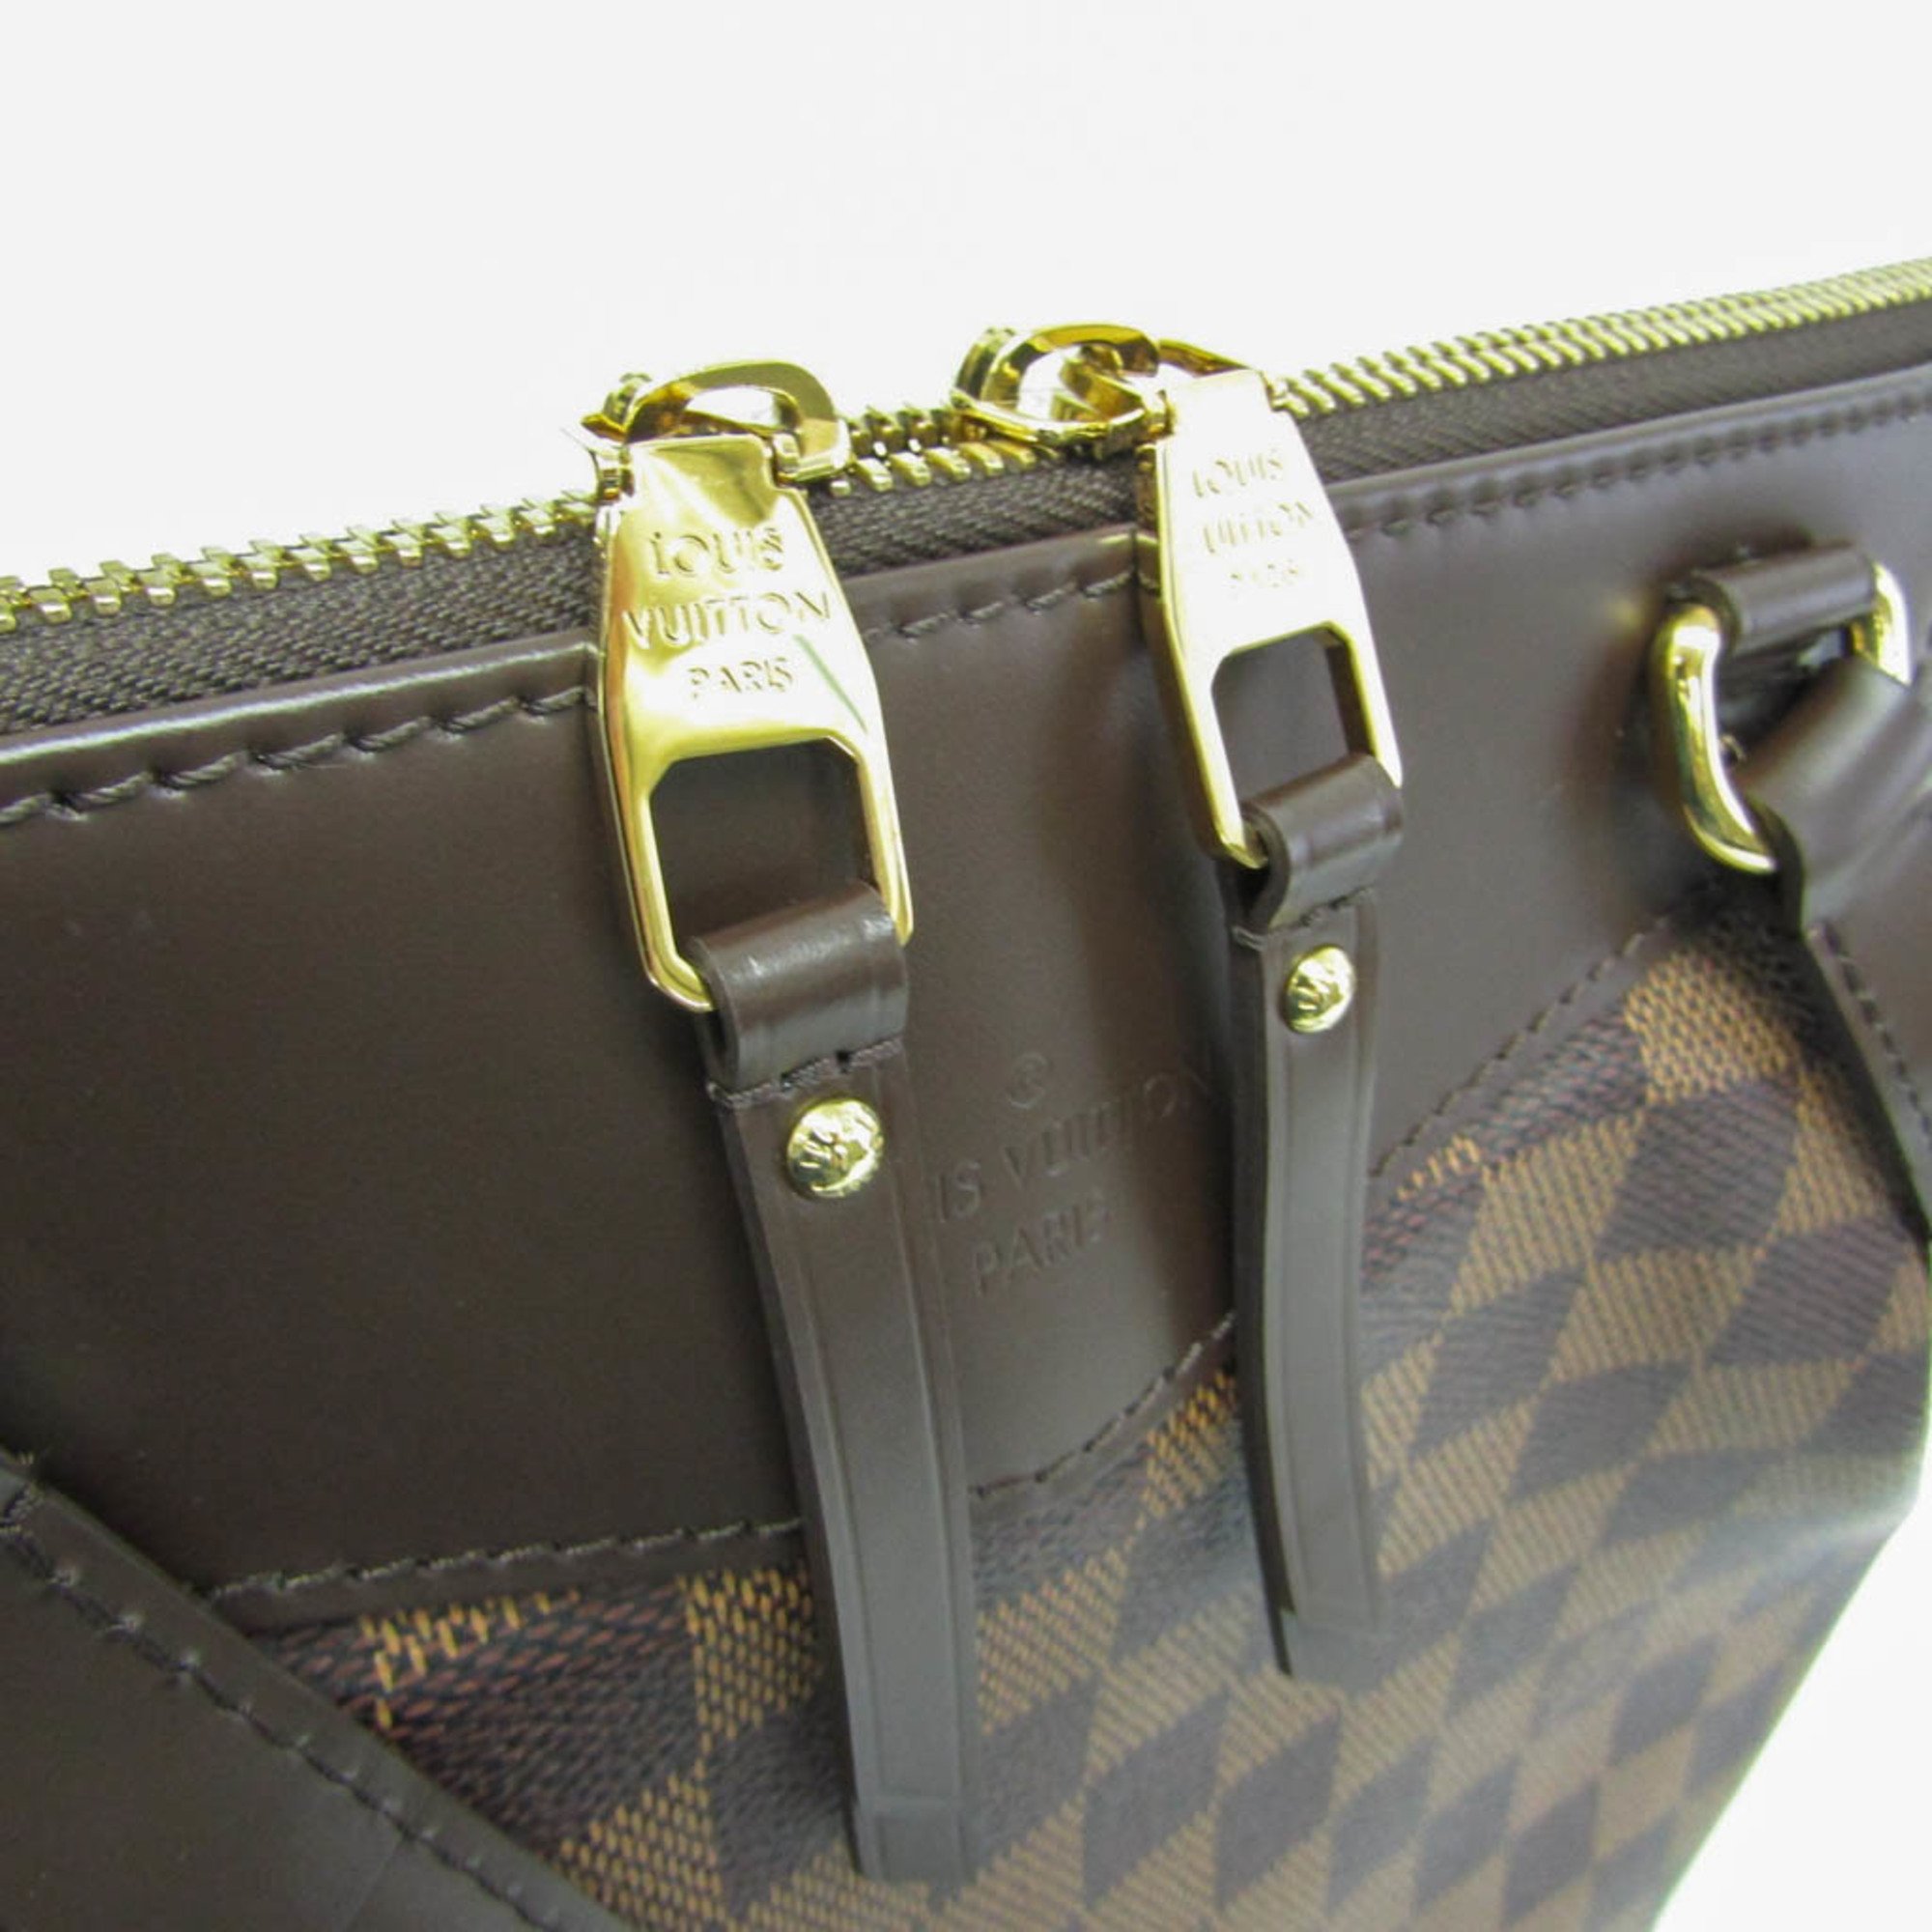 Louis Vuitton Damier Westminster PM N41102 Women's Handbag Ebene